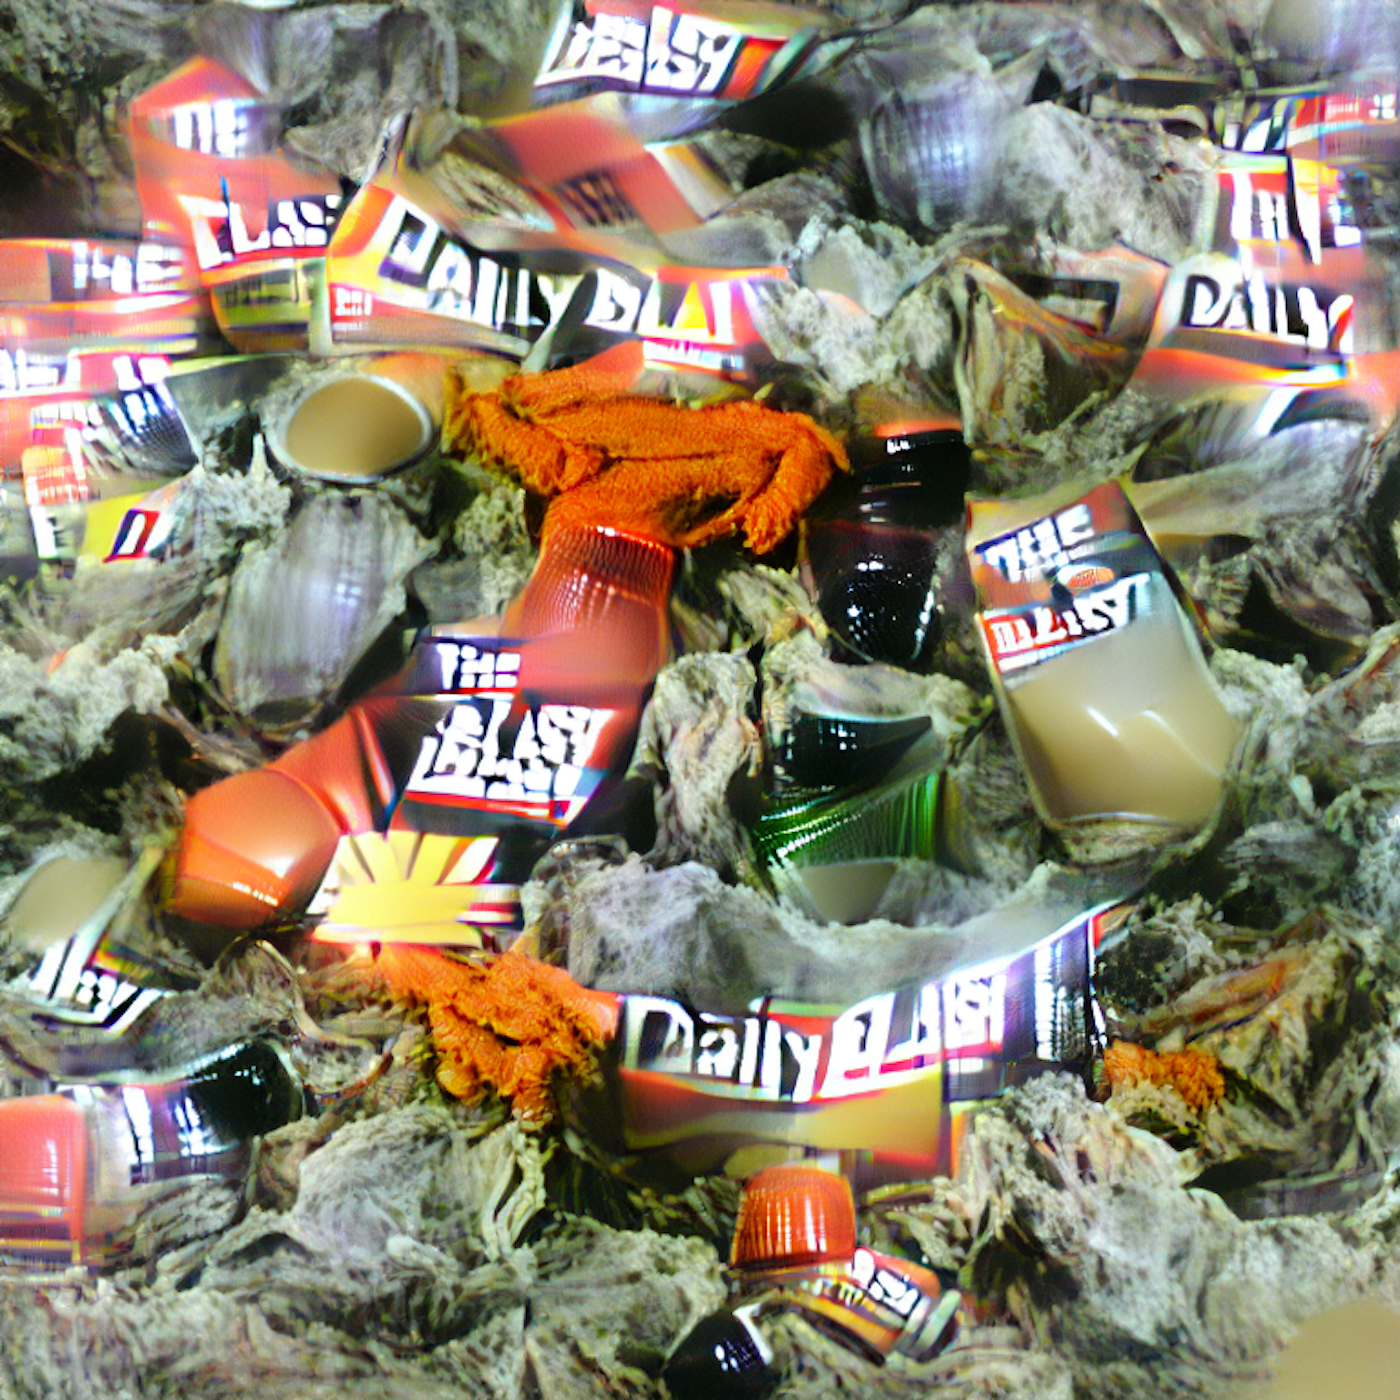 The Daily Blast [Almanac] hero artwork